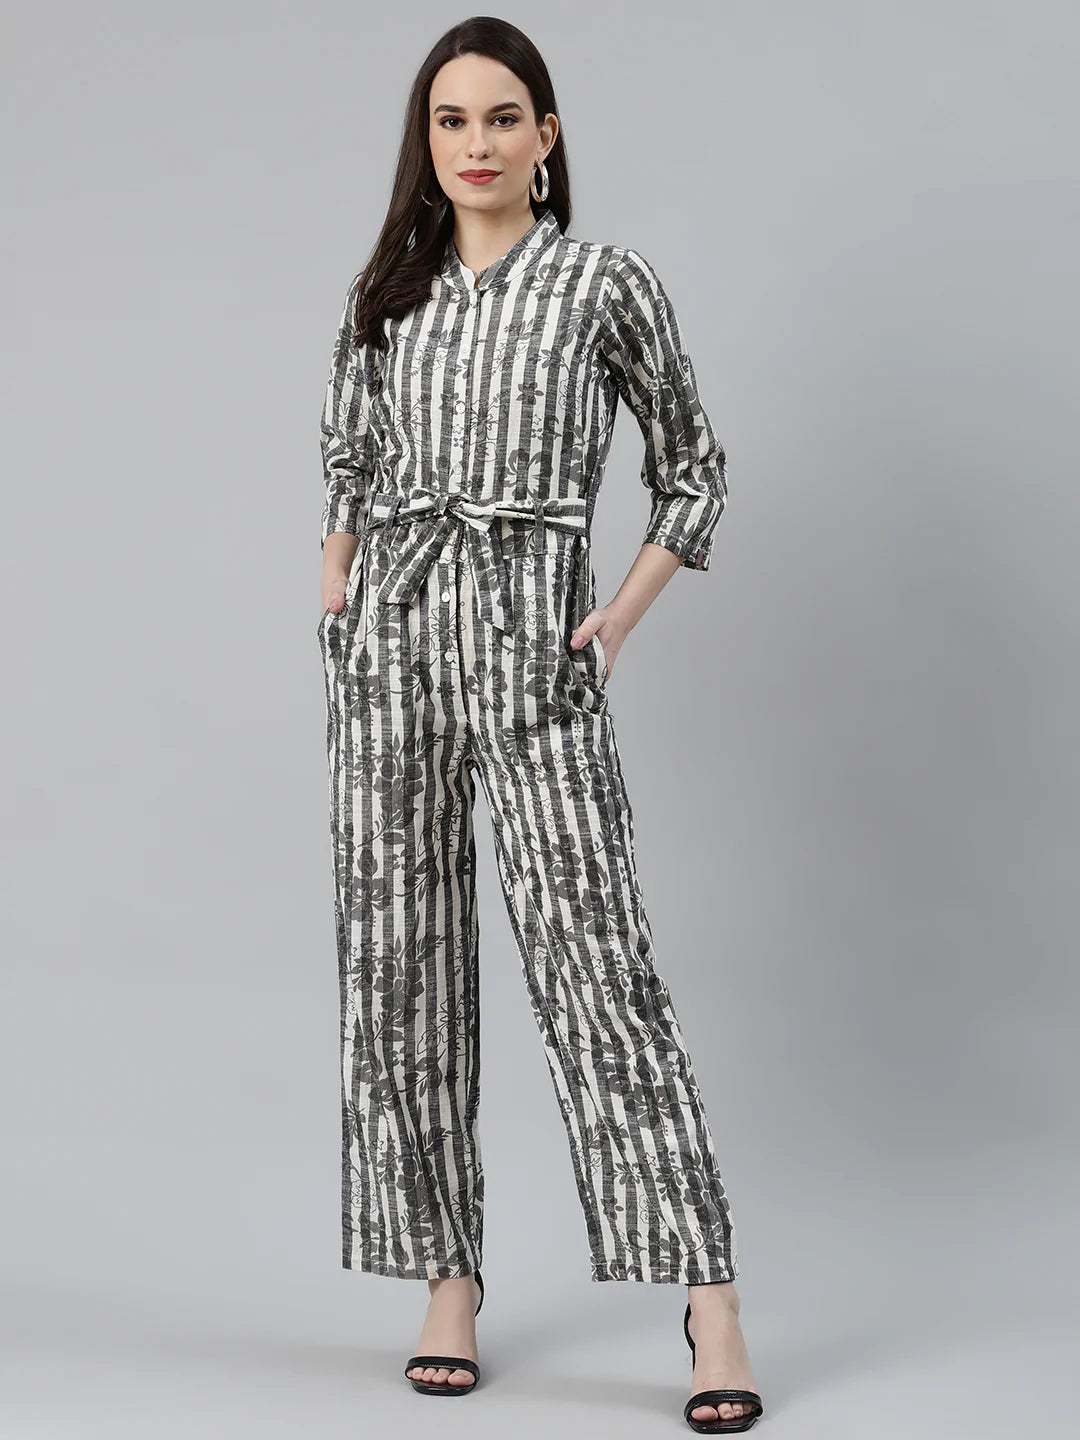 Jompers Women Off-White & Grey Striped Mandarin Collar Basic Jumpsuit ( JUP 8009 Grey )